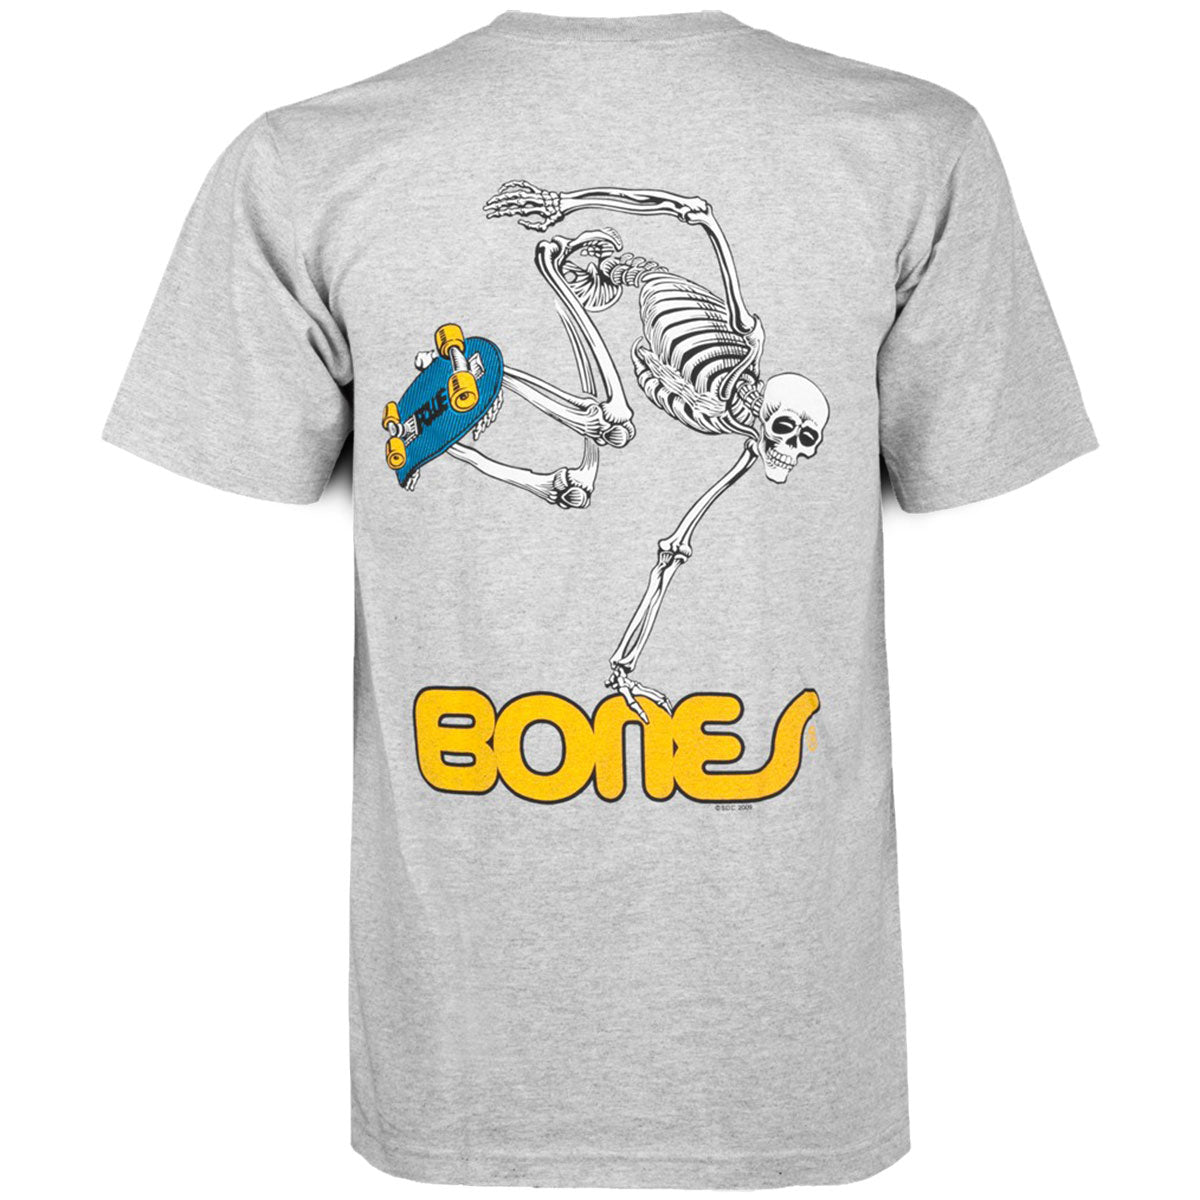 Powell-Peralta Skateboard Skeleton T-Shirt - Grey image 1